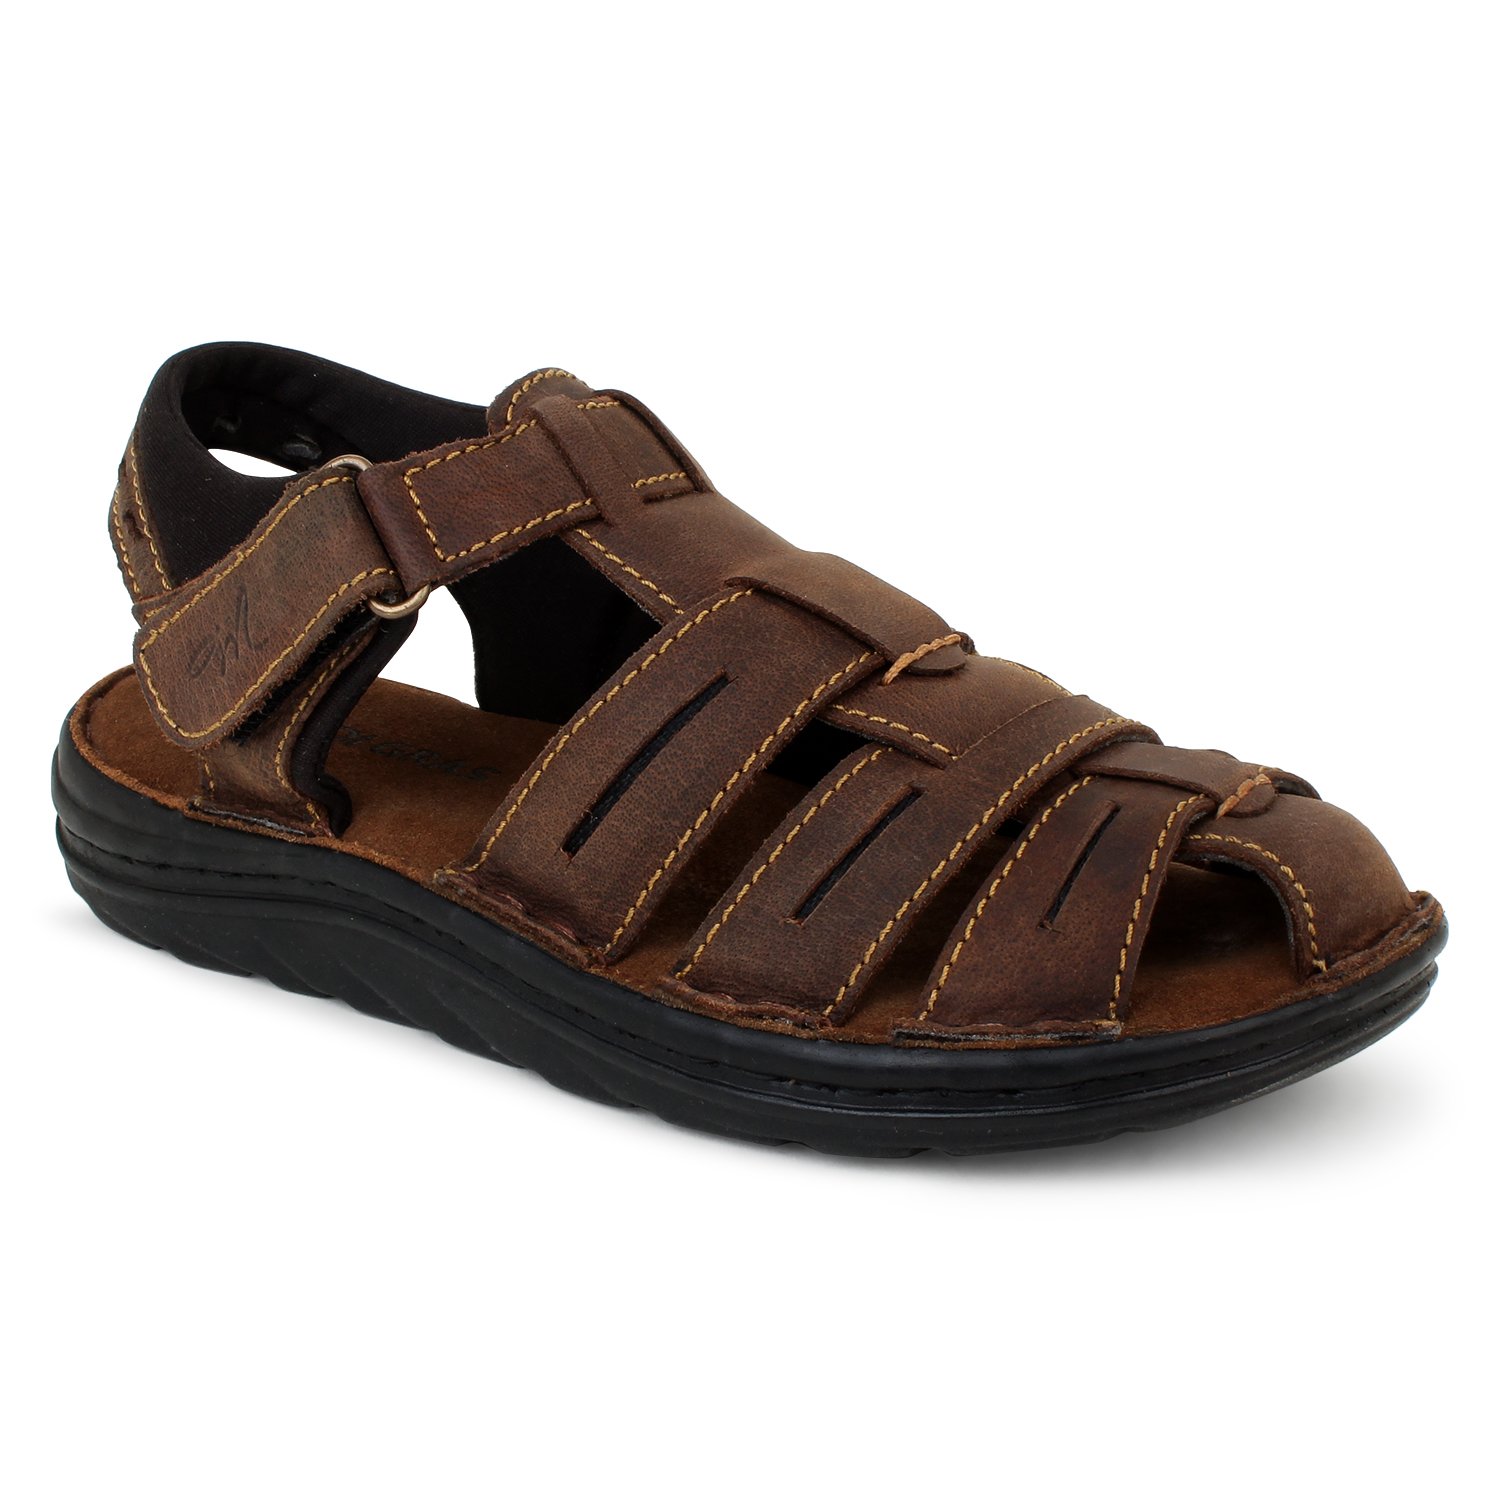 Dark Brown Leather Closed Toe Sandals for Children - Mardi Gras